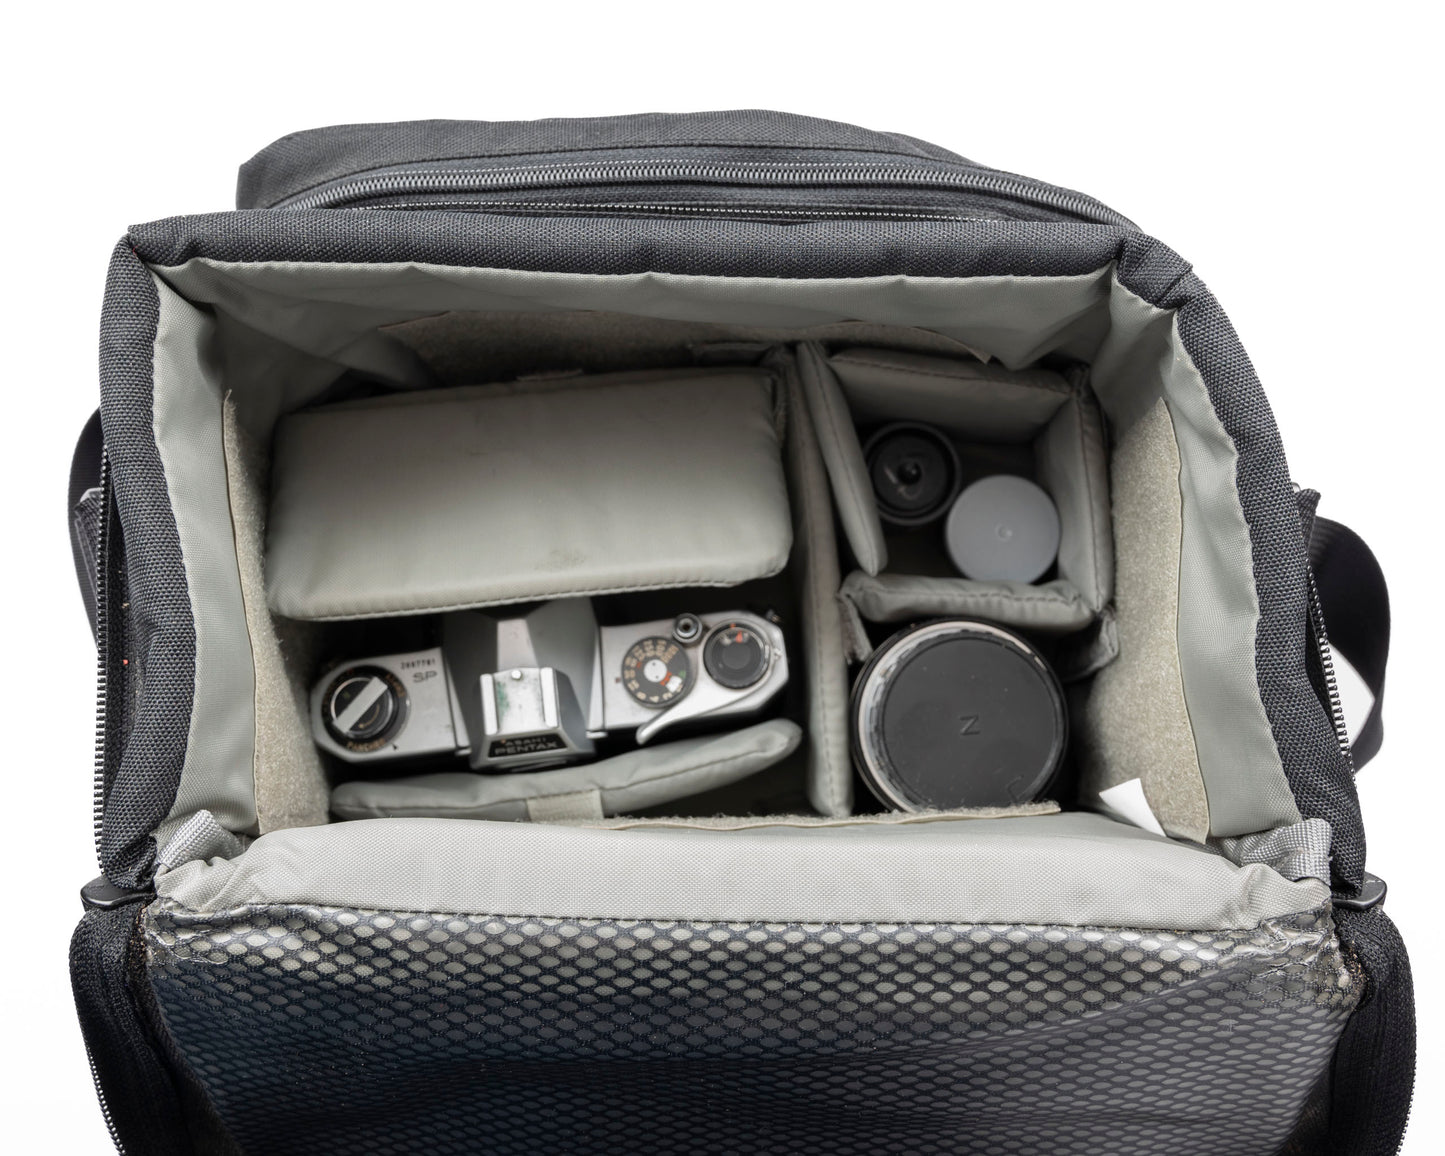 Lowepro Nova 3 mid-size camera bag